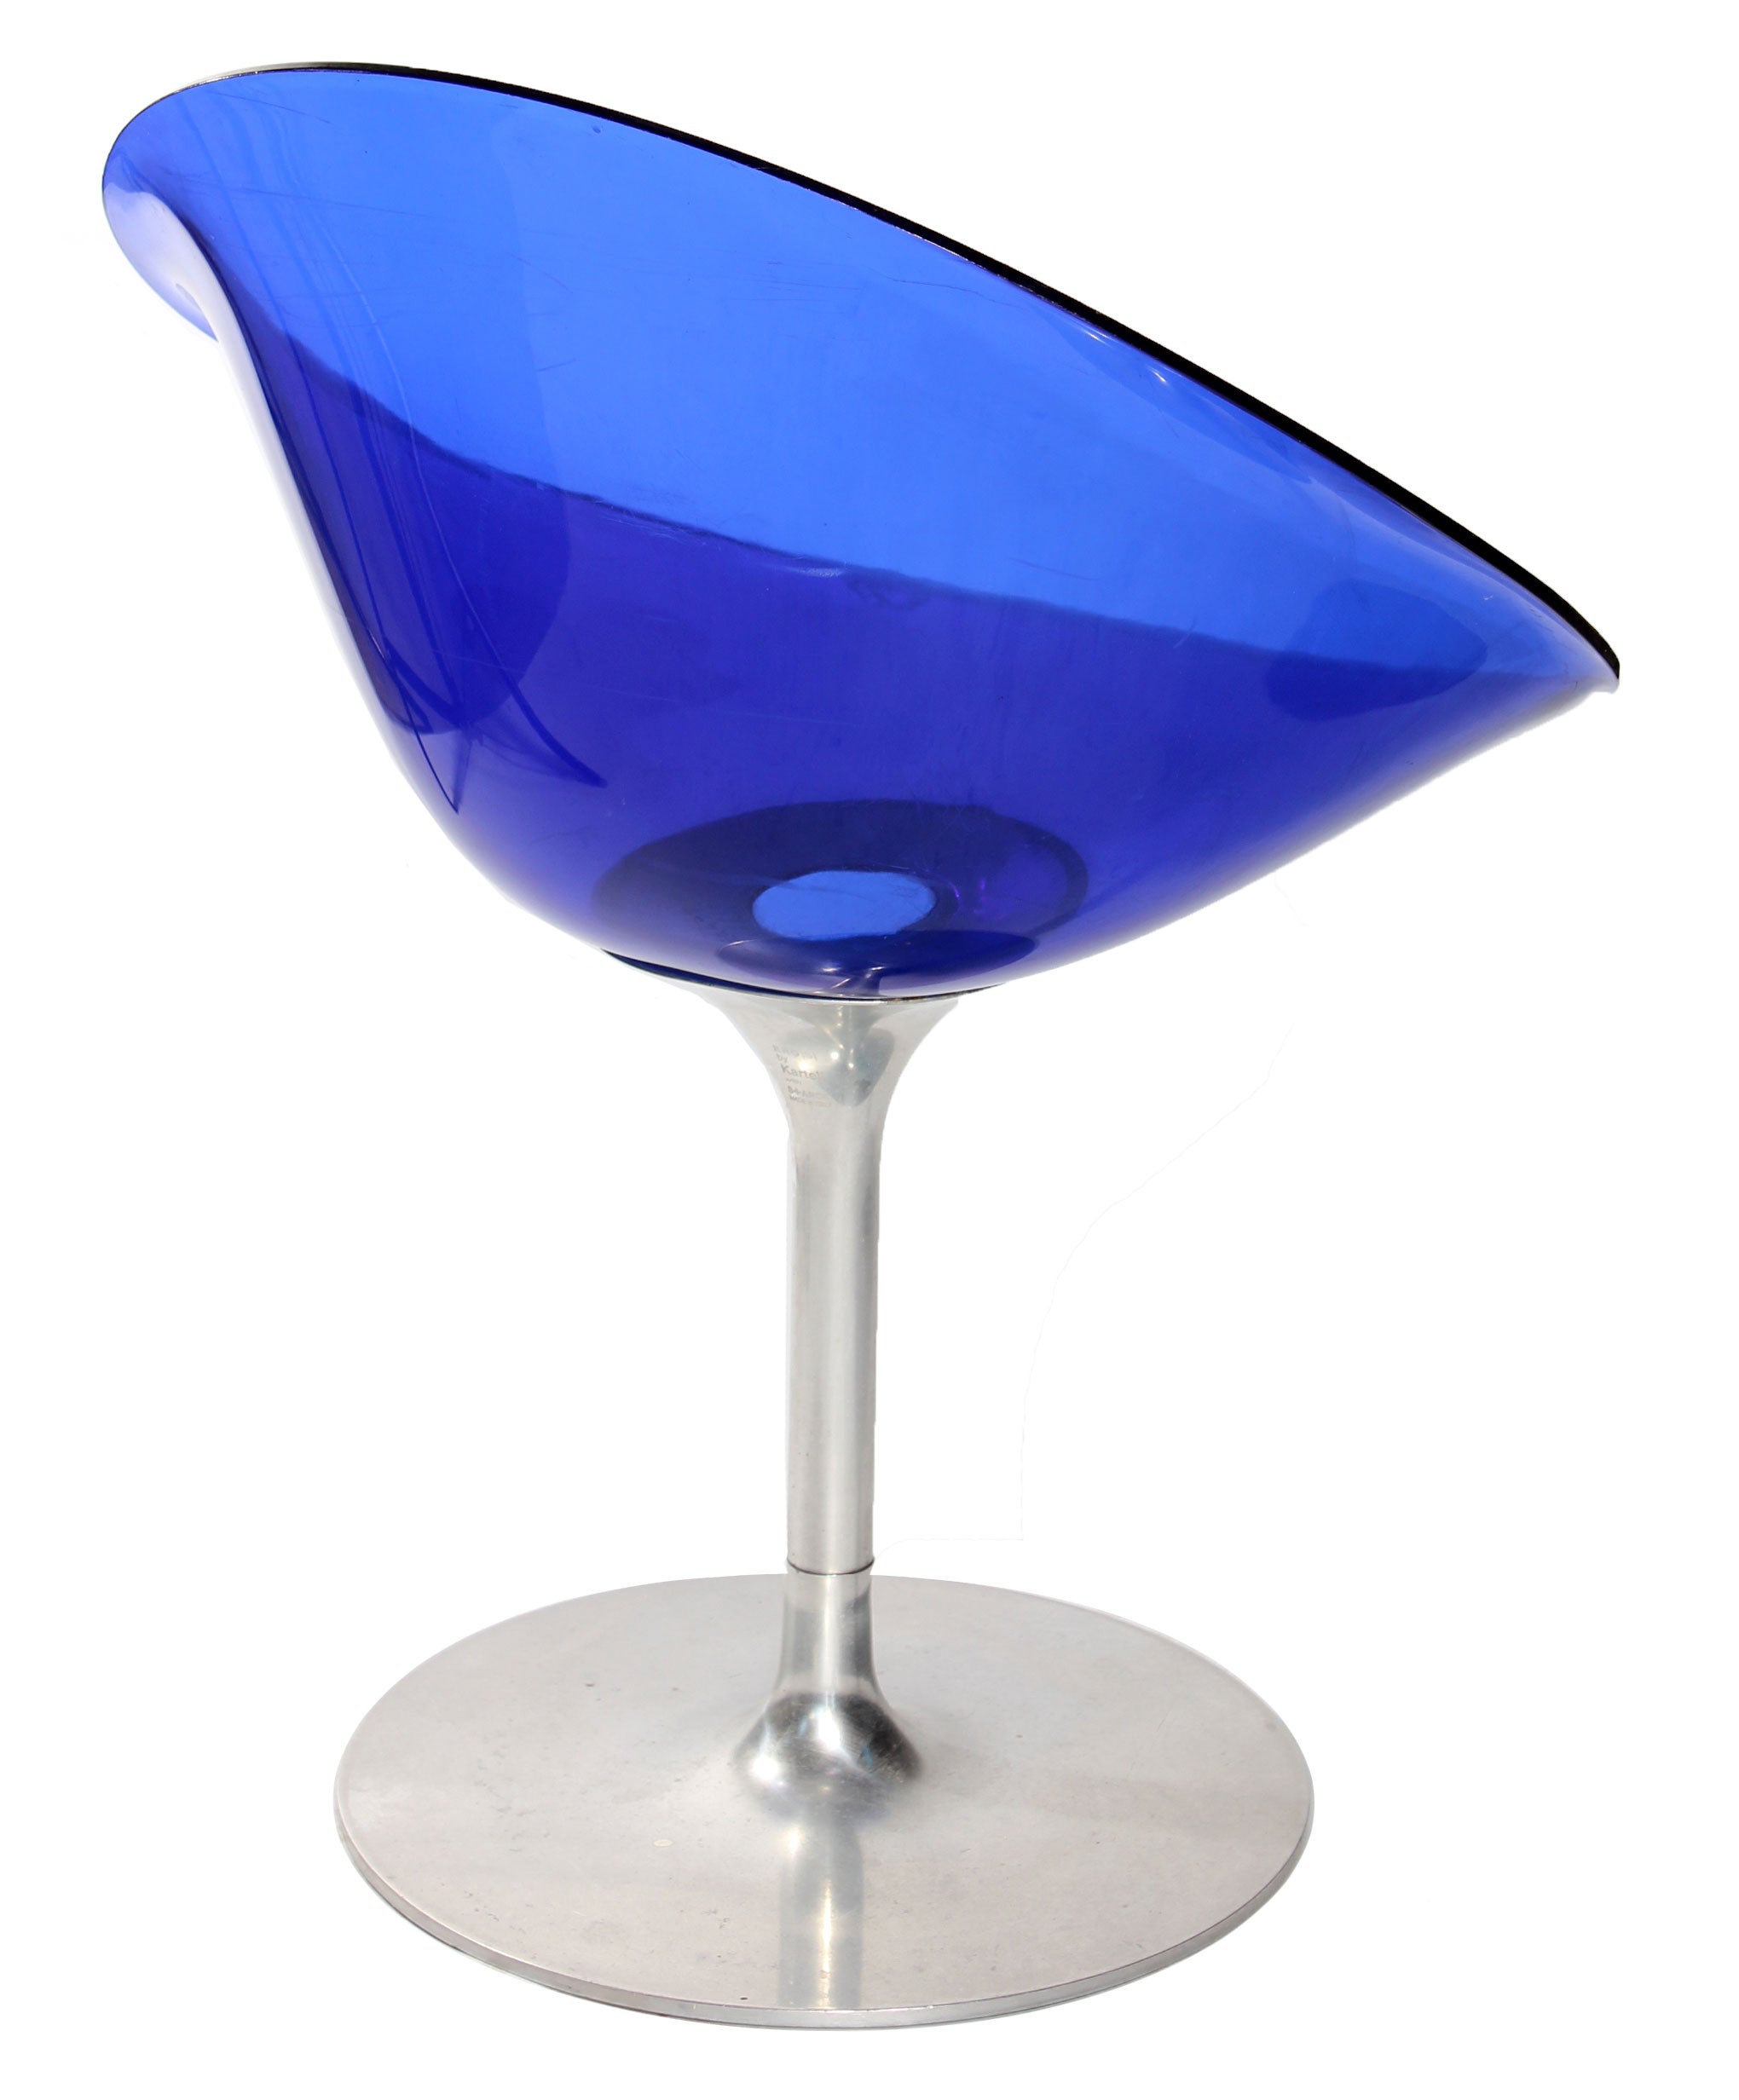 Sillas Italianas Giratorias Eros de Lucita Azul, de Philippe Starck para Kartell